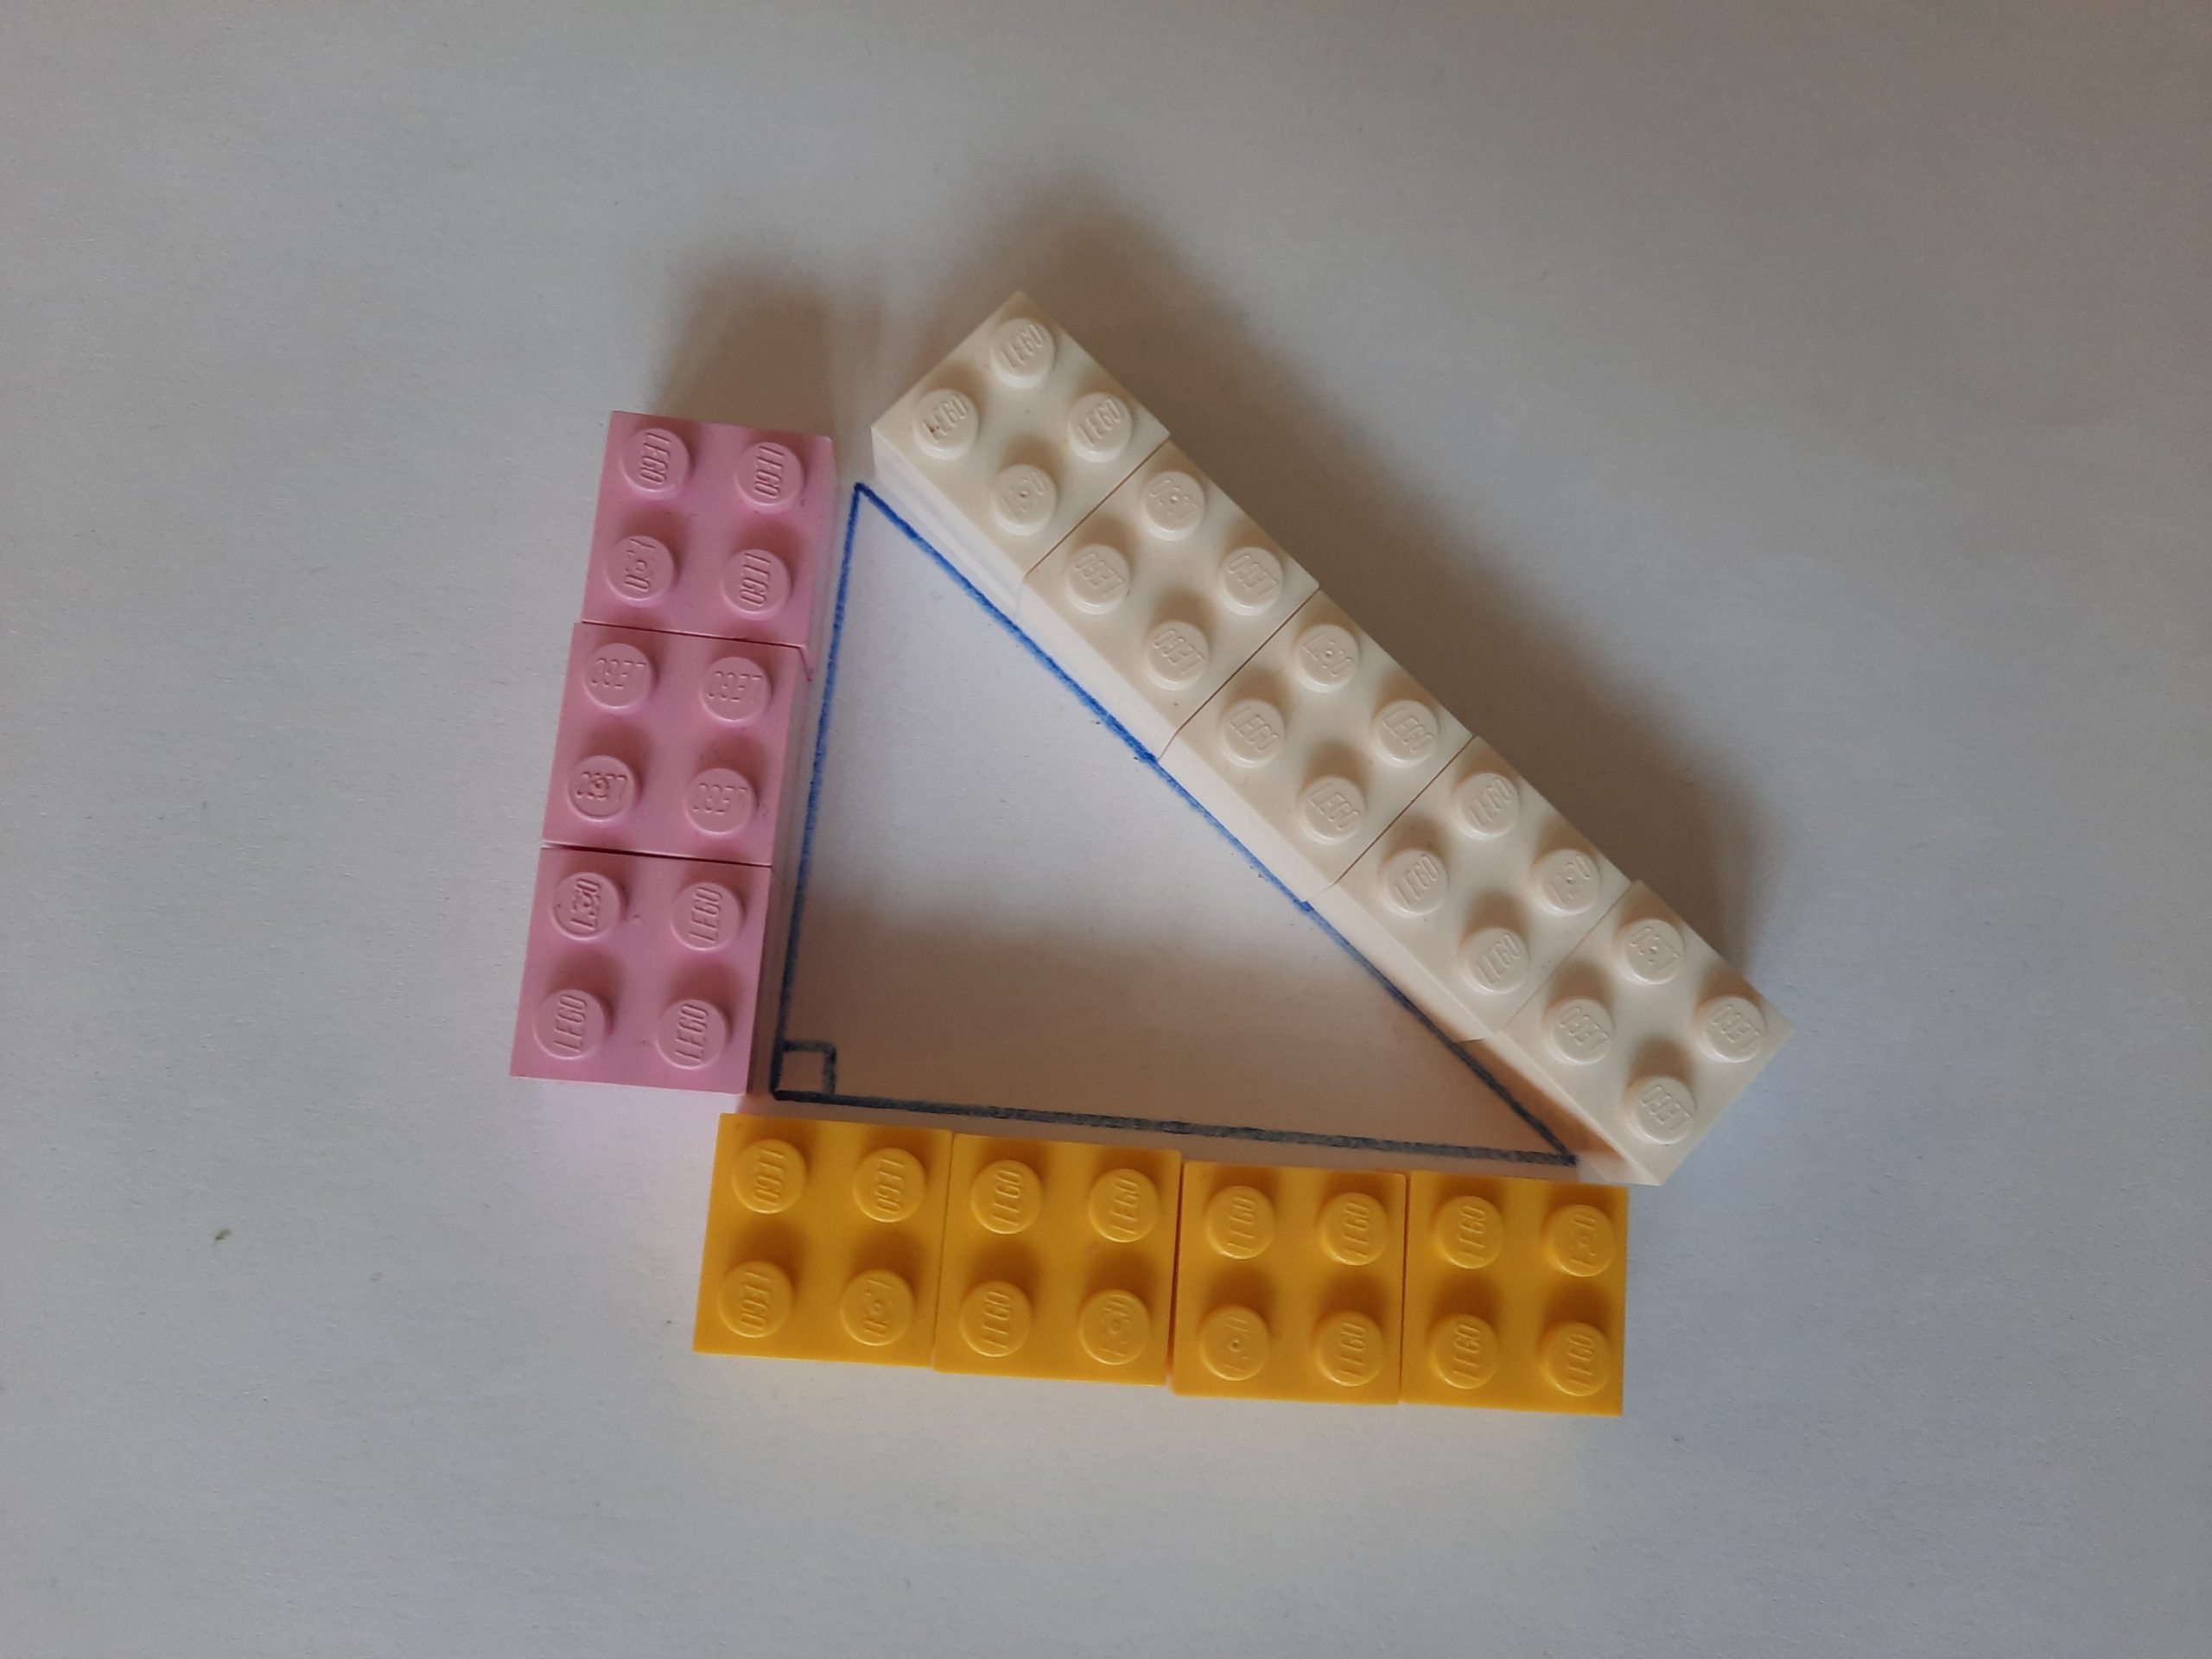 théorème de Pythagore avec la pédagogie Montessori